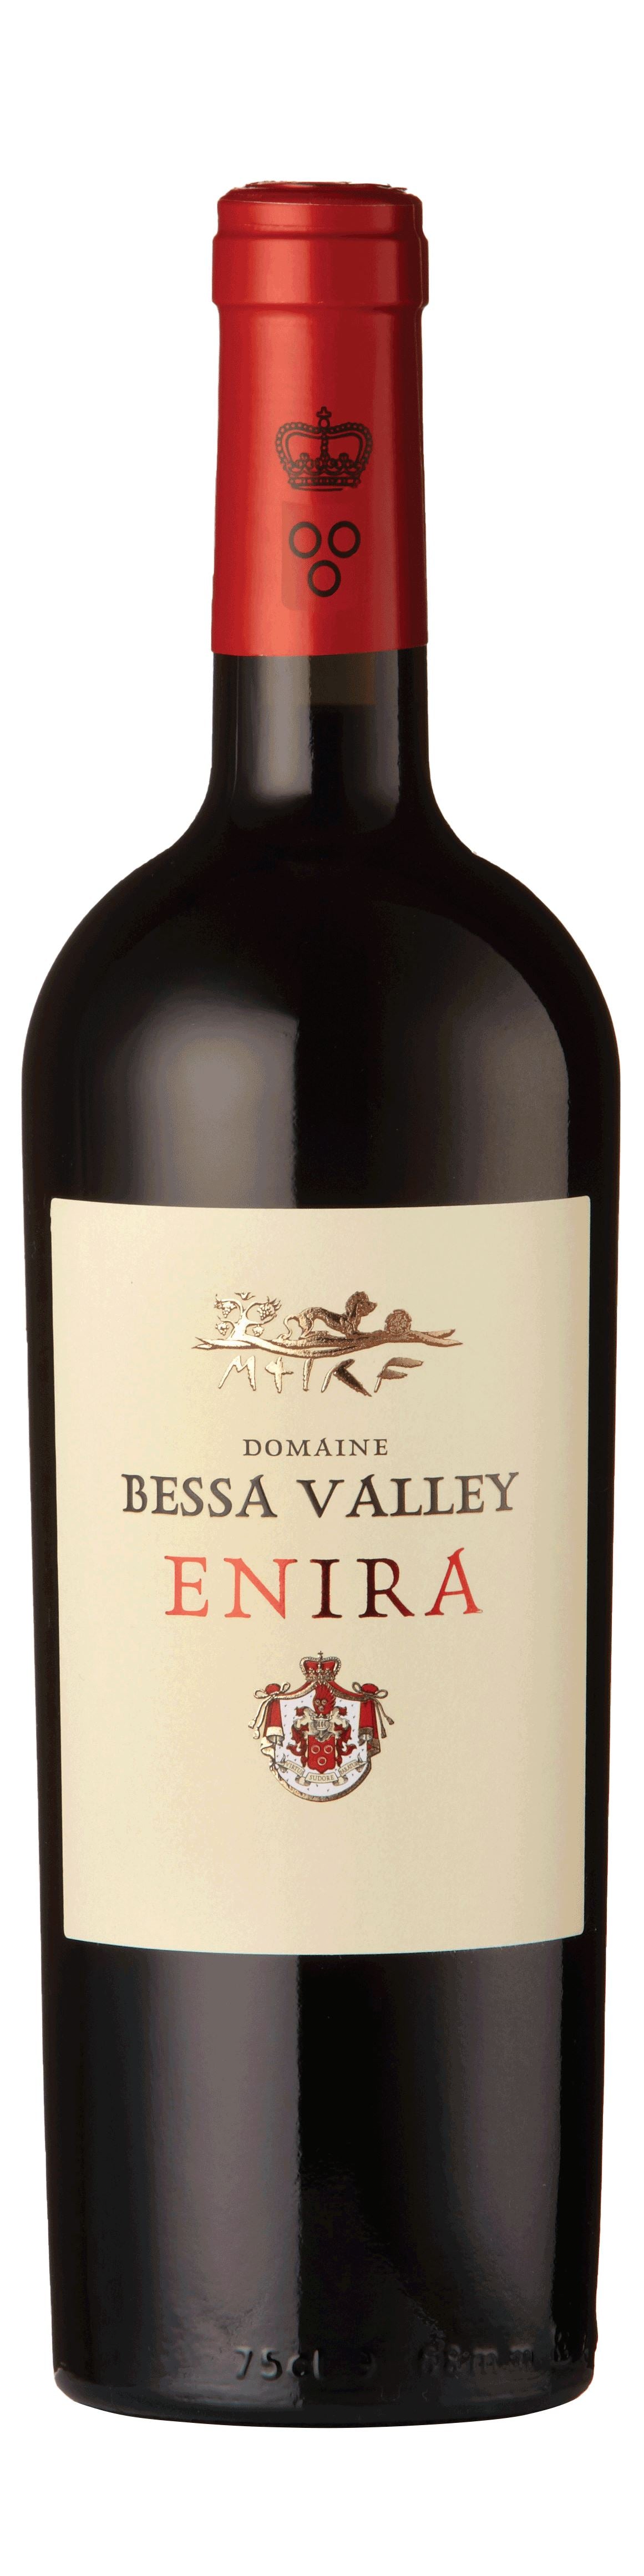 Enira, Bessa Valley, Bulgaria, 2018 Wine Bottle Alliance Wines 